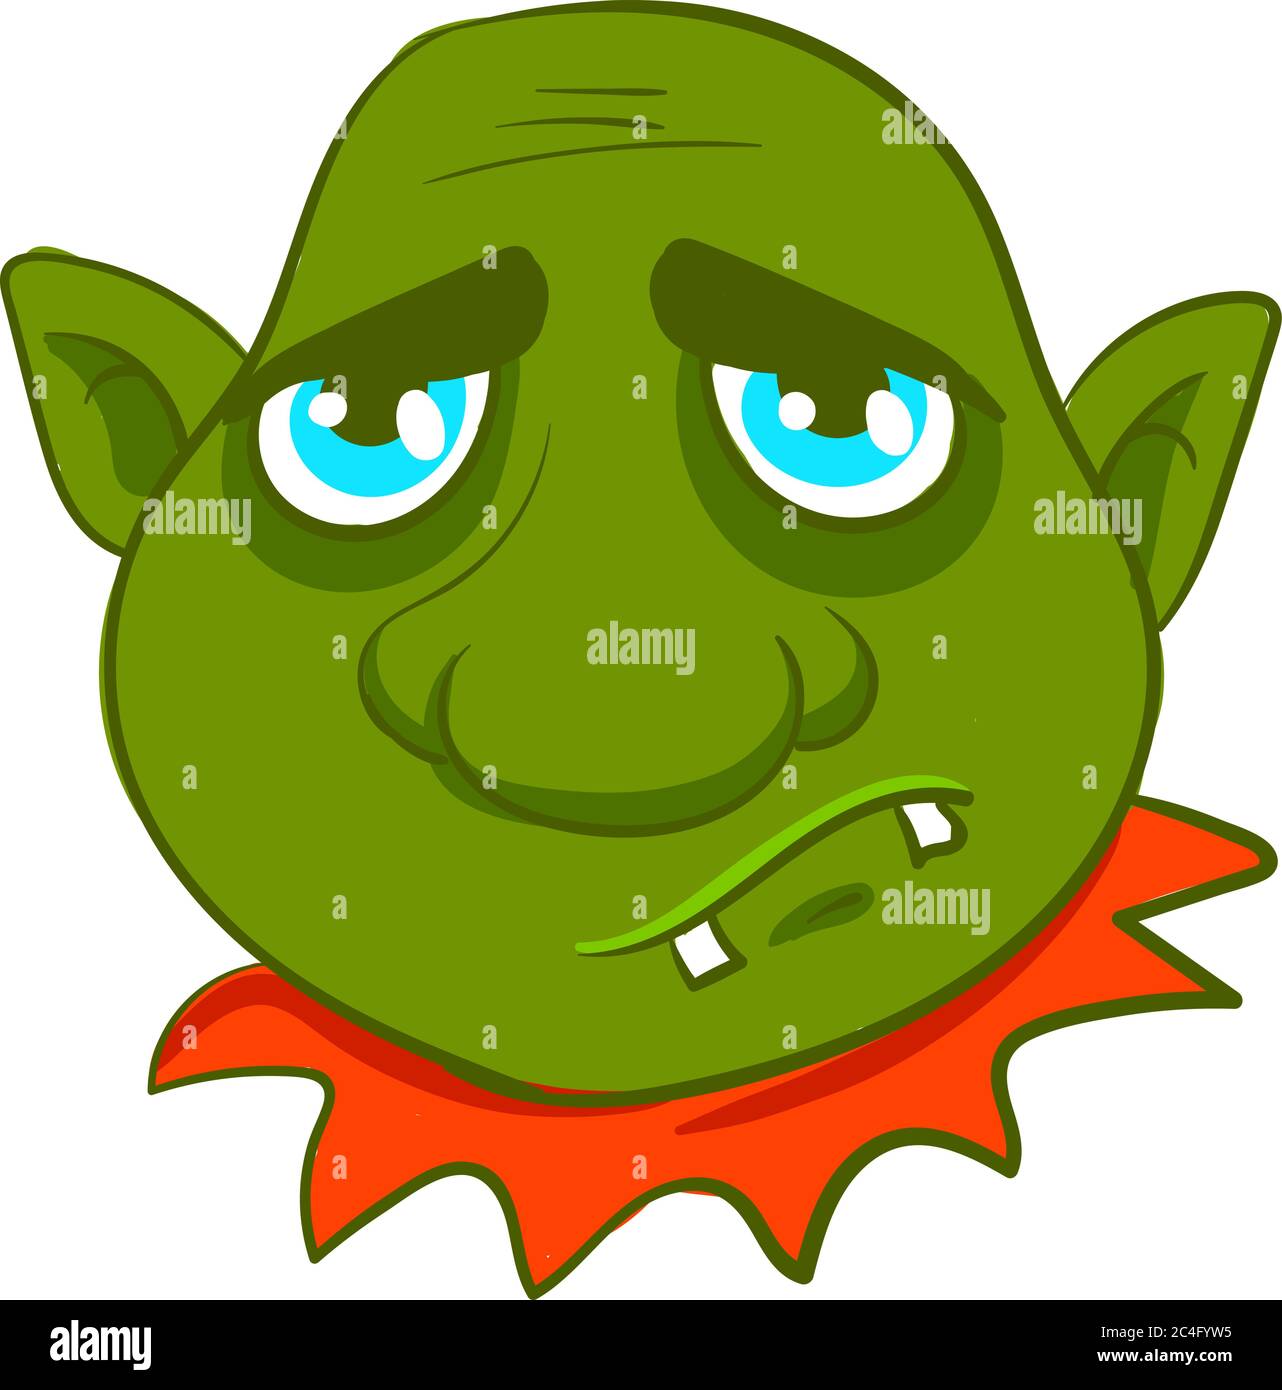 Creepy happy troll face | Greeting Card